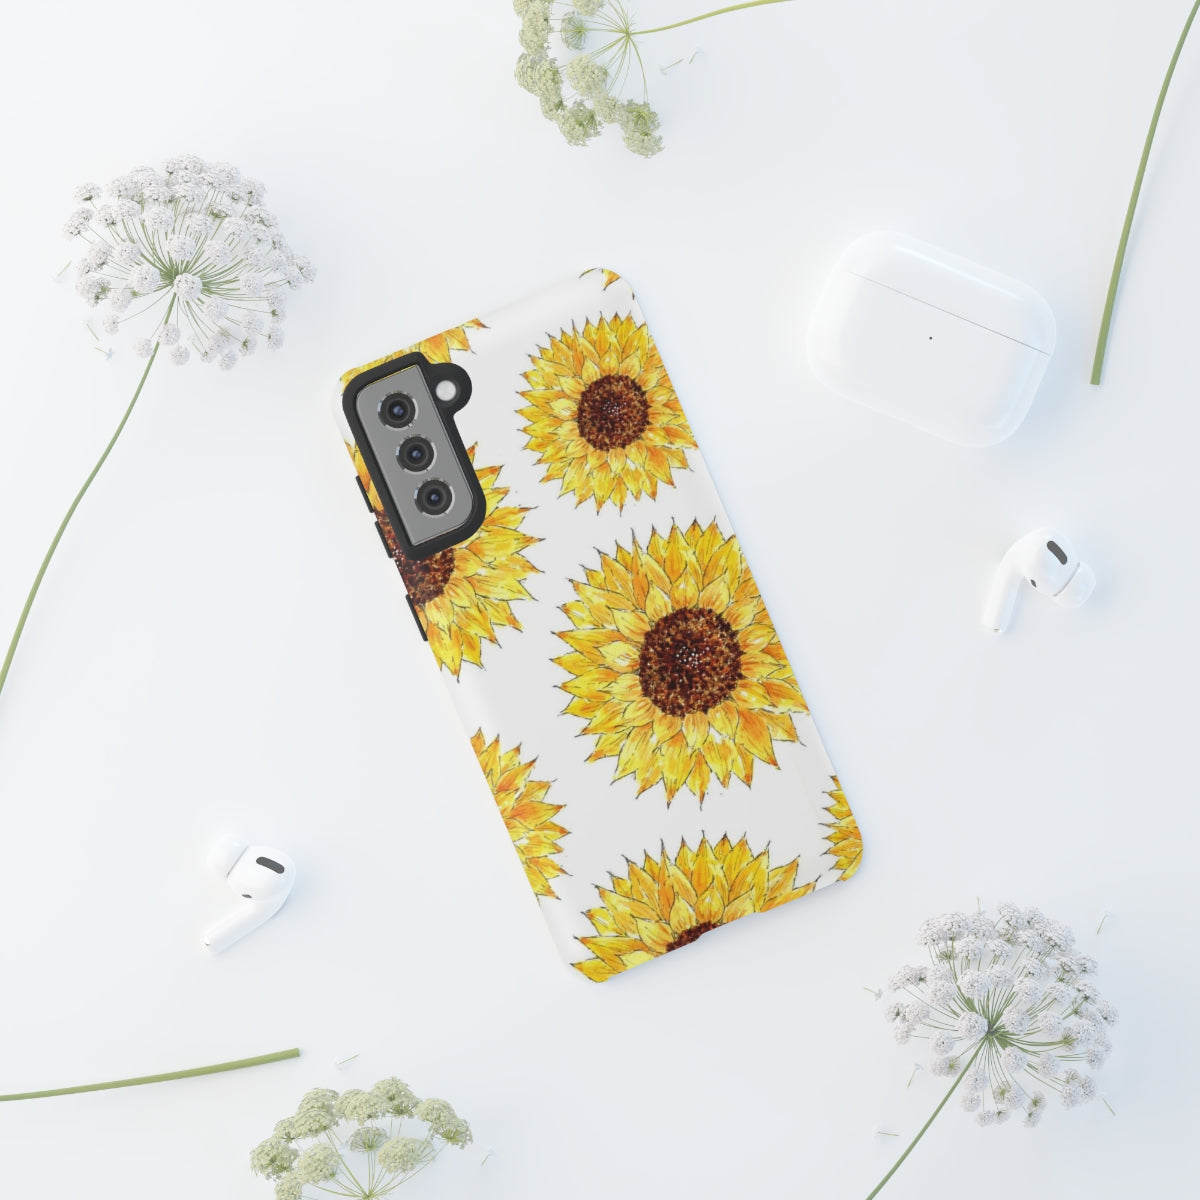 Sunflower Pattern Tough Phone Case